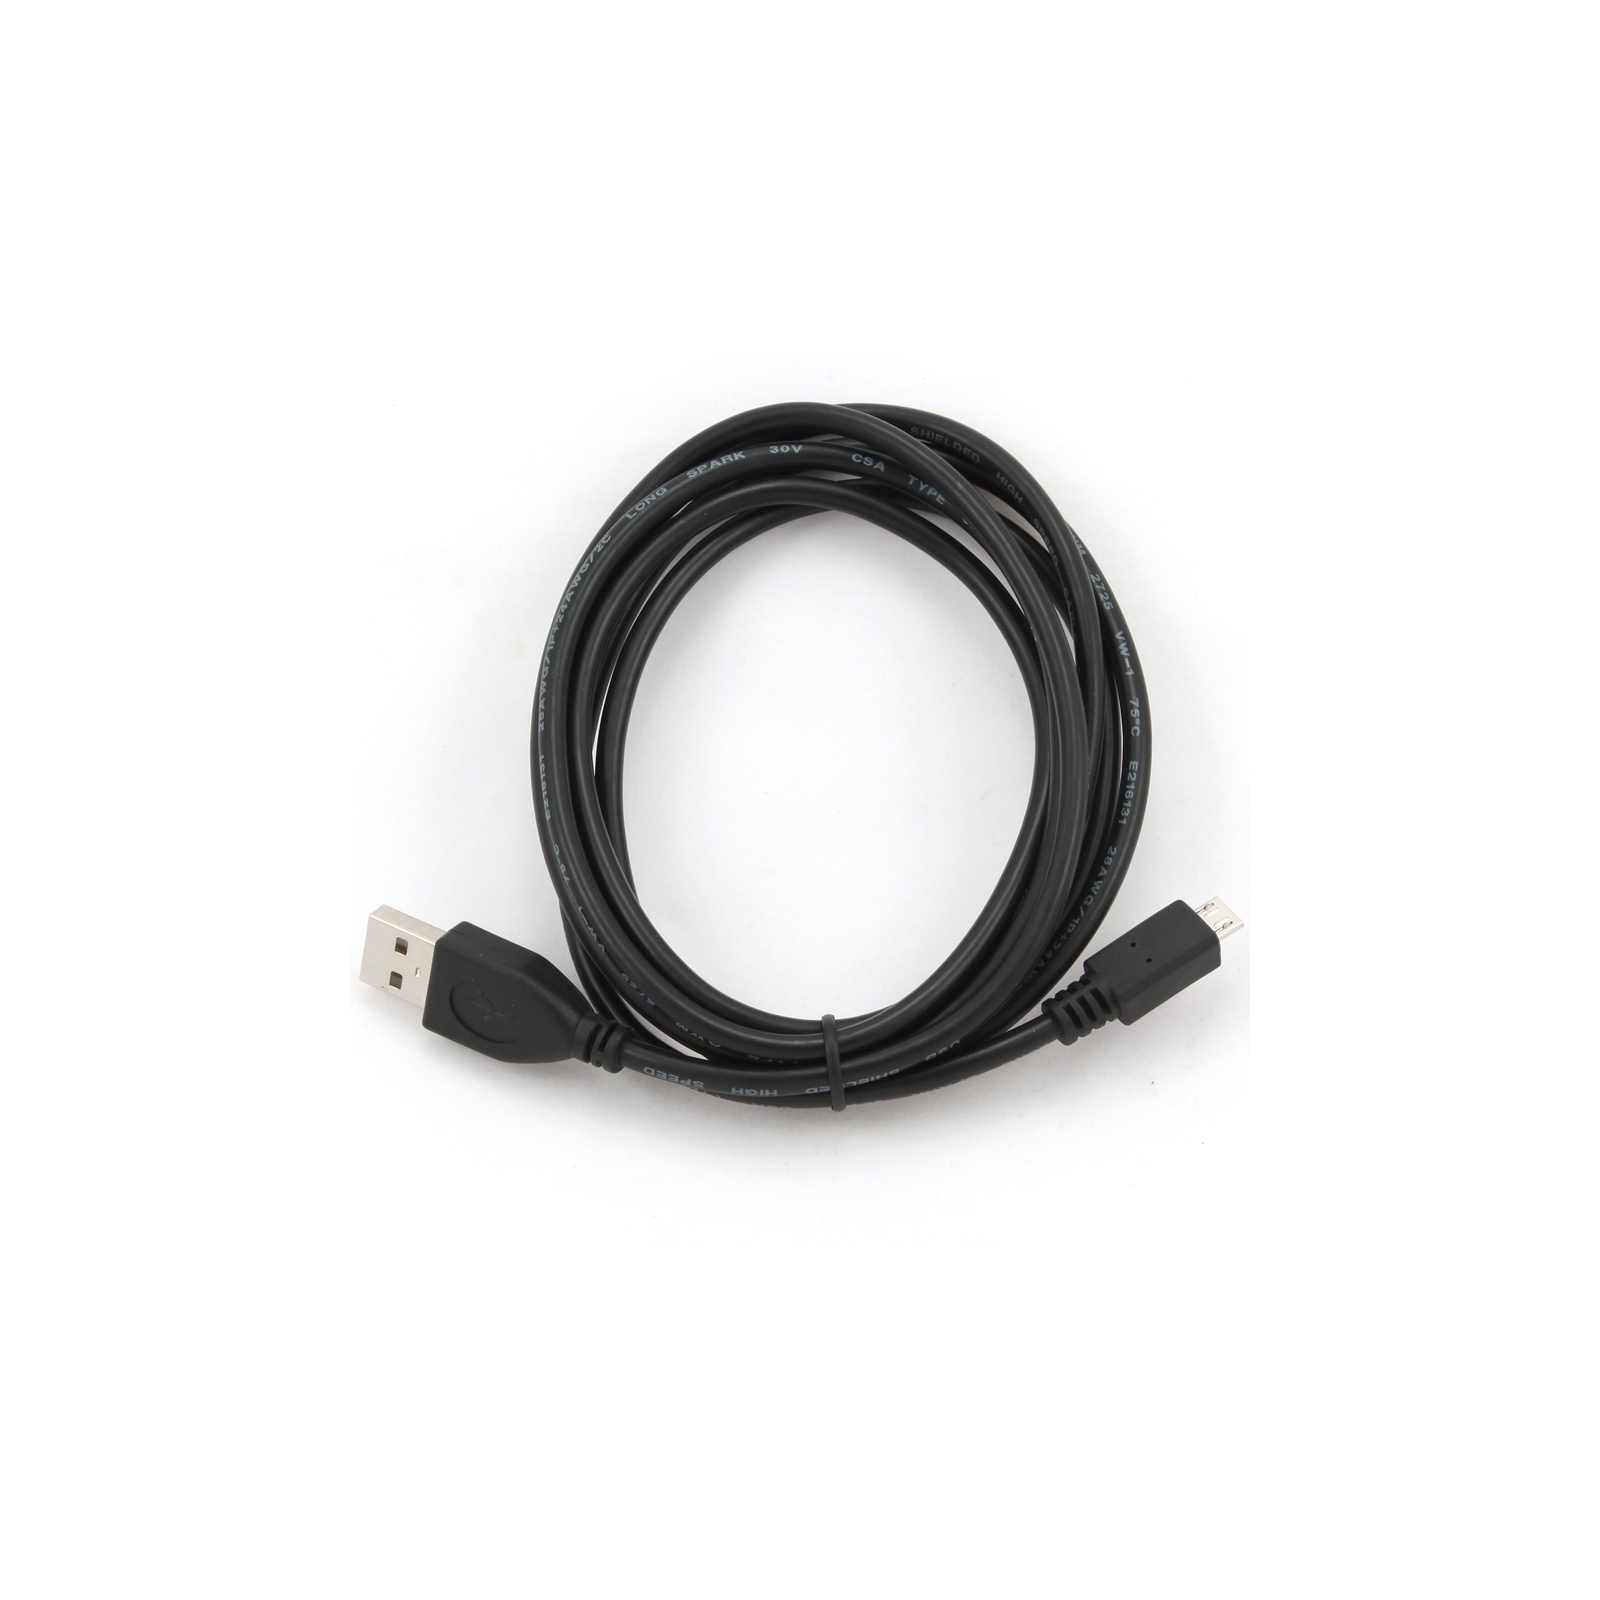 Дата кабель USB 2.0 AM to Micro 5P 1.8m Cablexpert (CCP-mUSB2-AMBM-6-W)